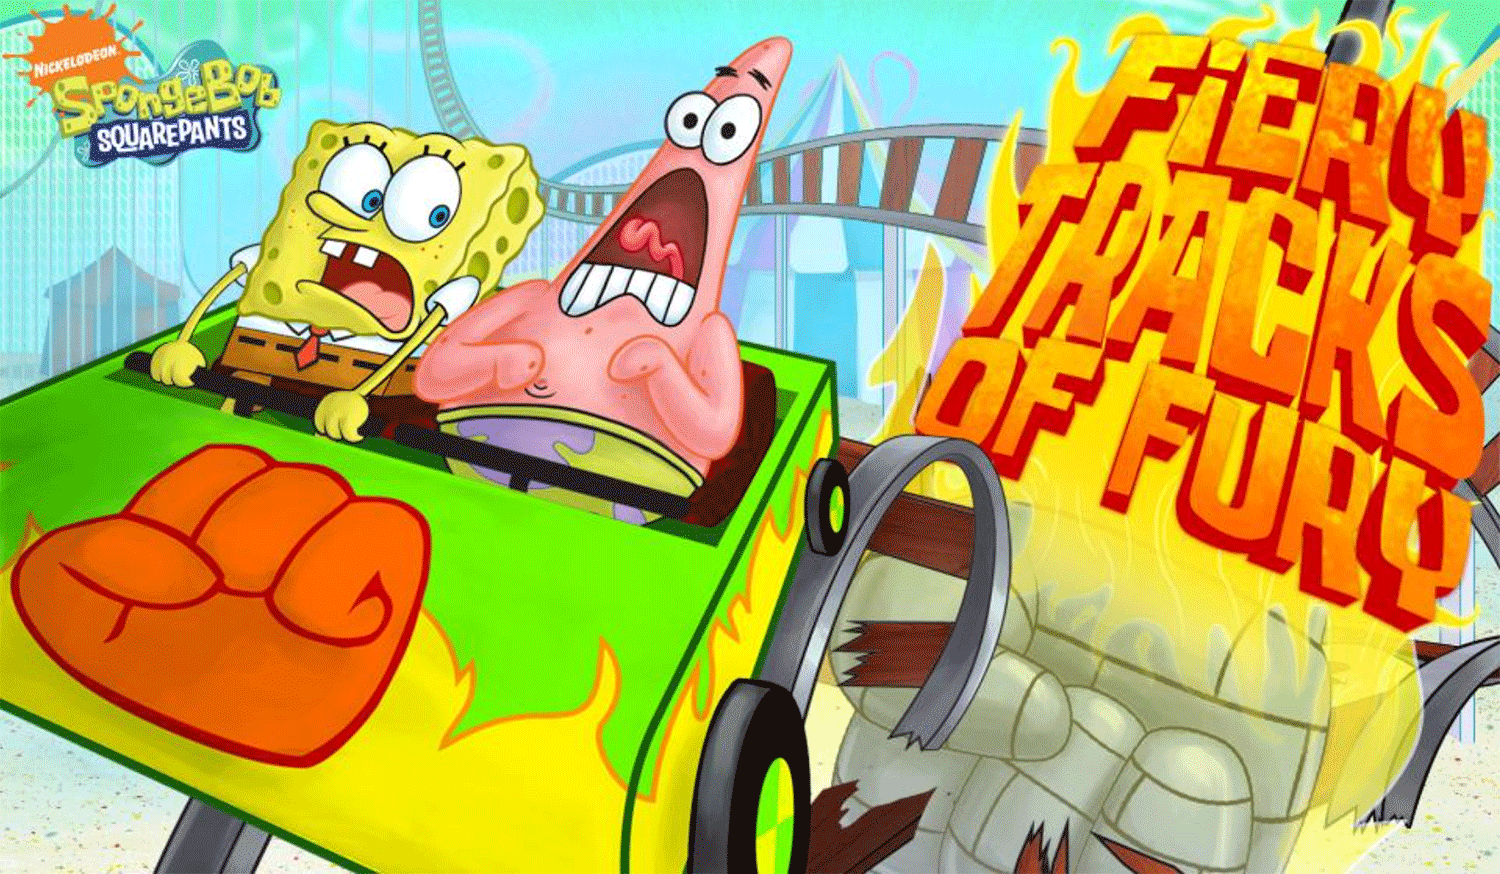 Spongebob Squarepants Fiery Tracks of Fury Welcome Screen Screenshot.